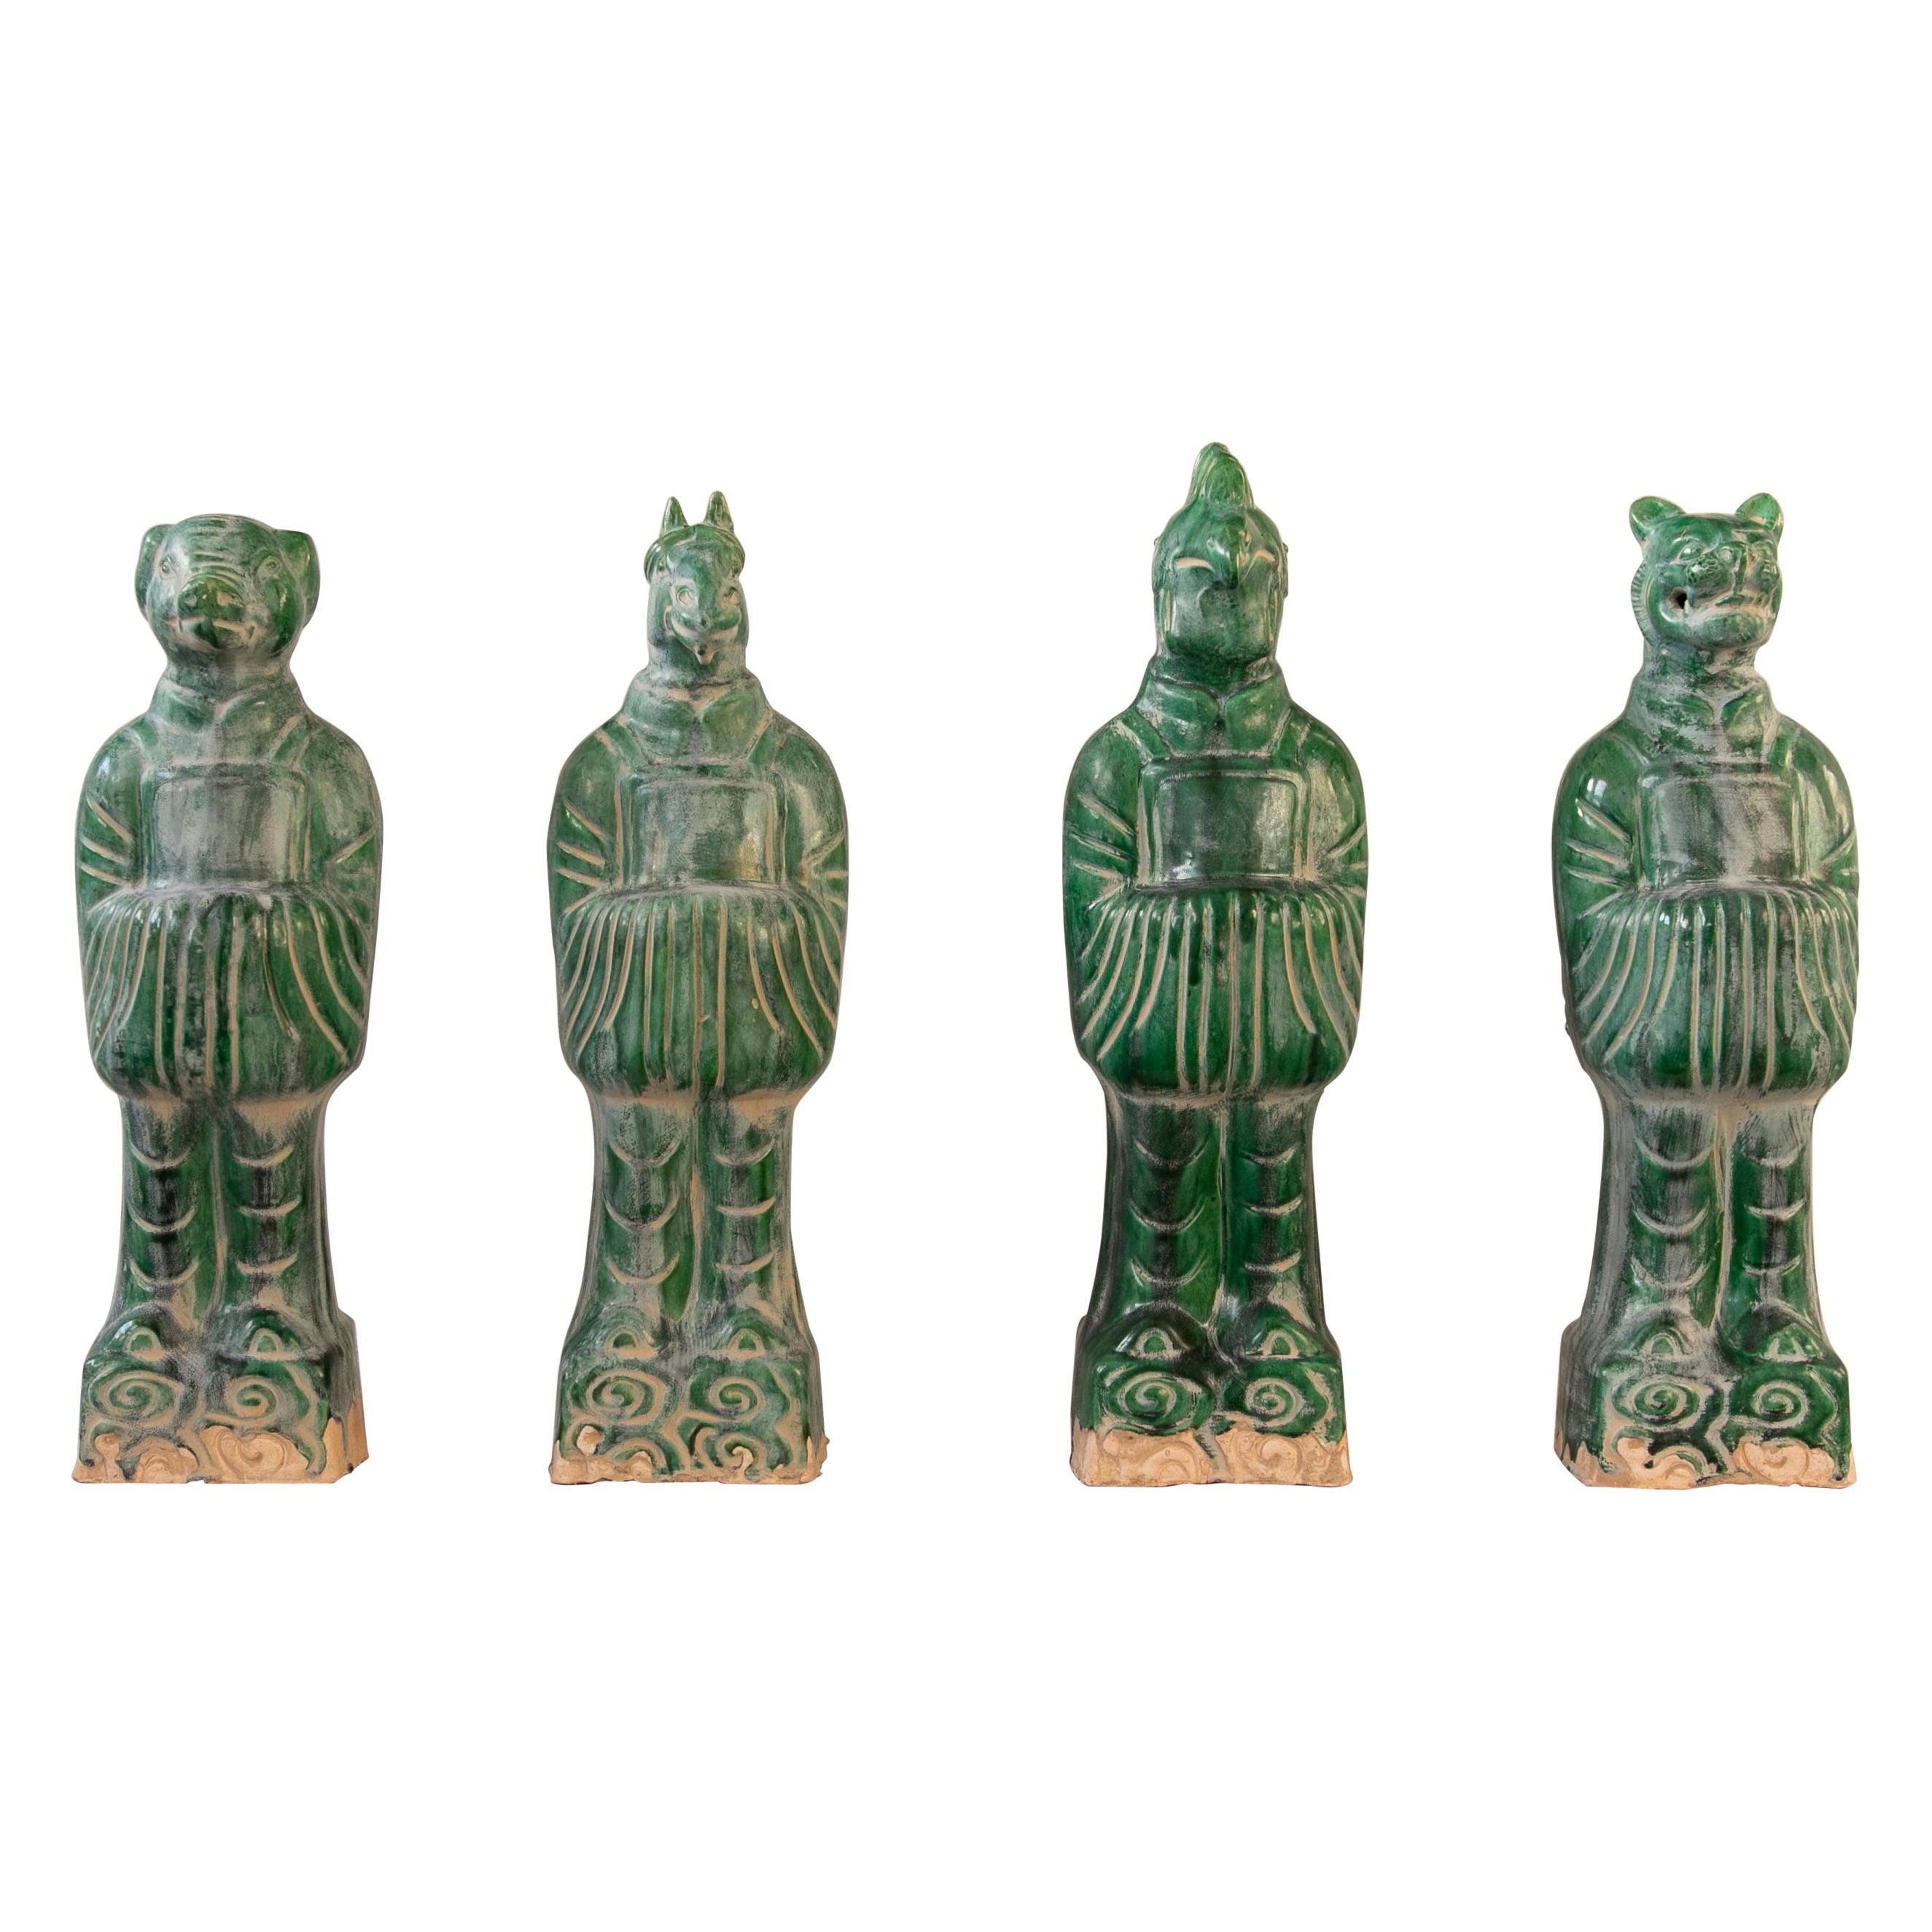 Set of Four Chinese Mythological Gods in Green Glazed Terracotta